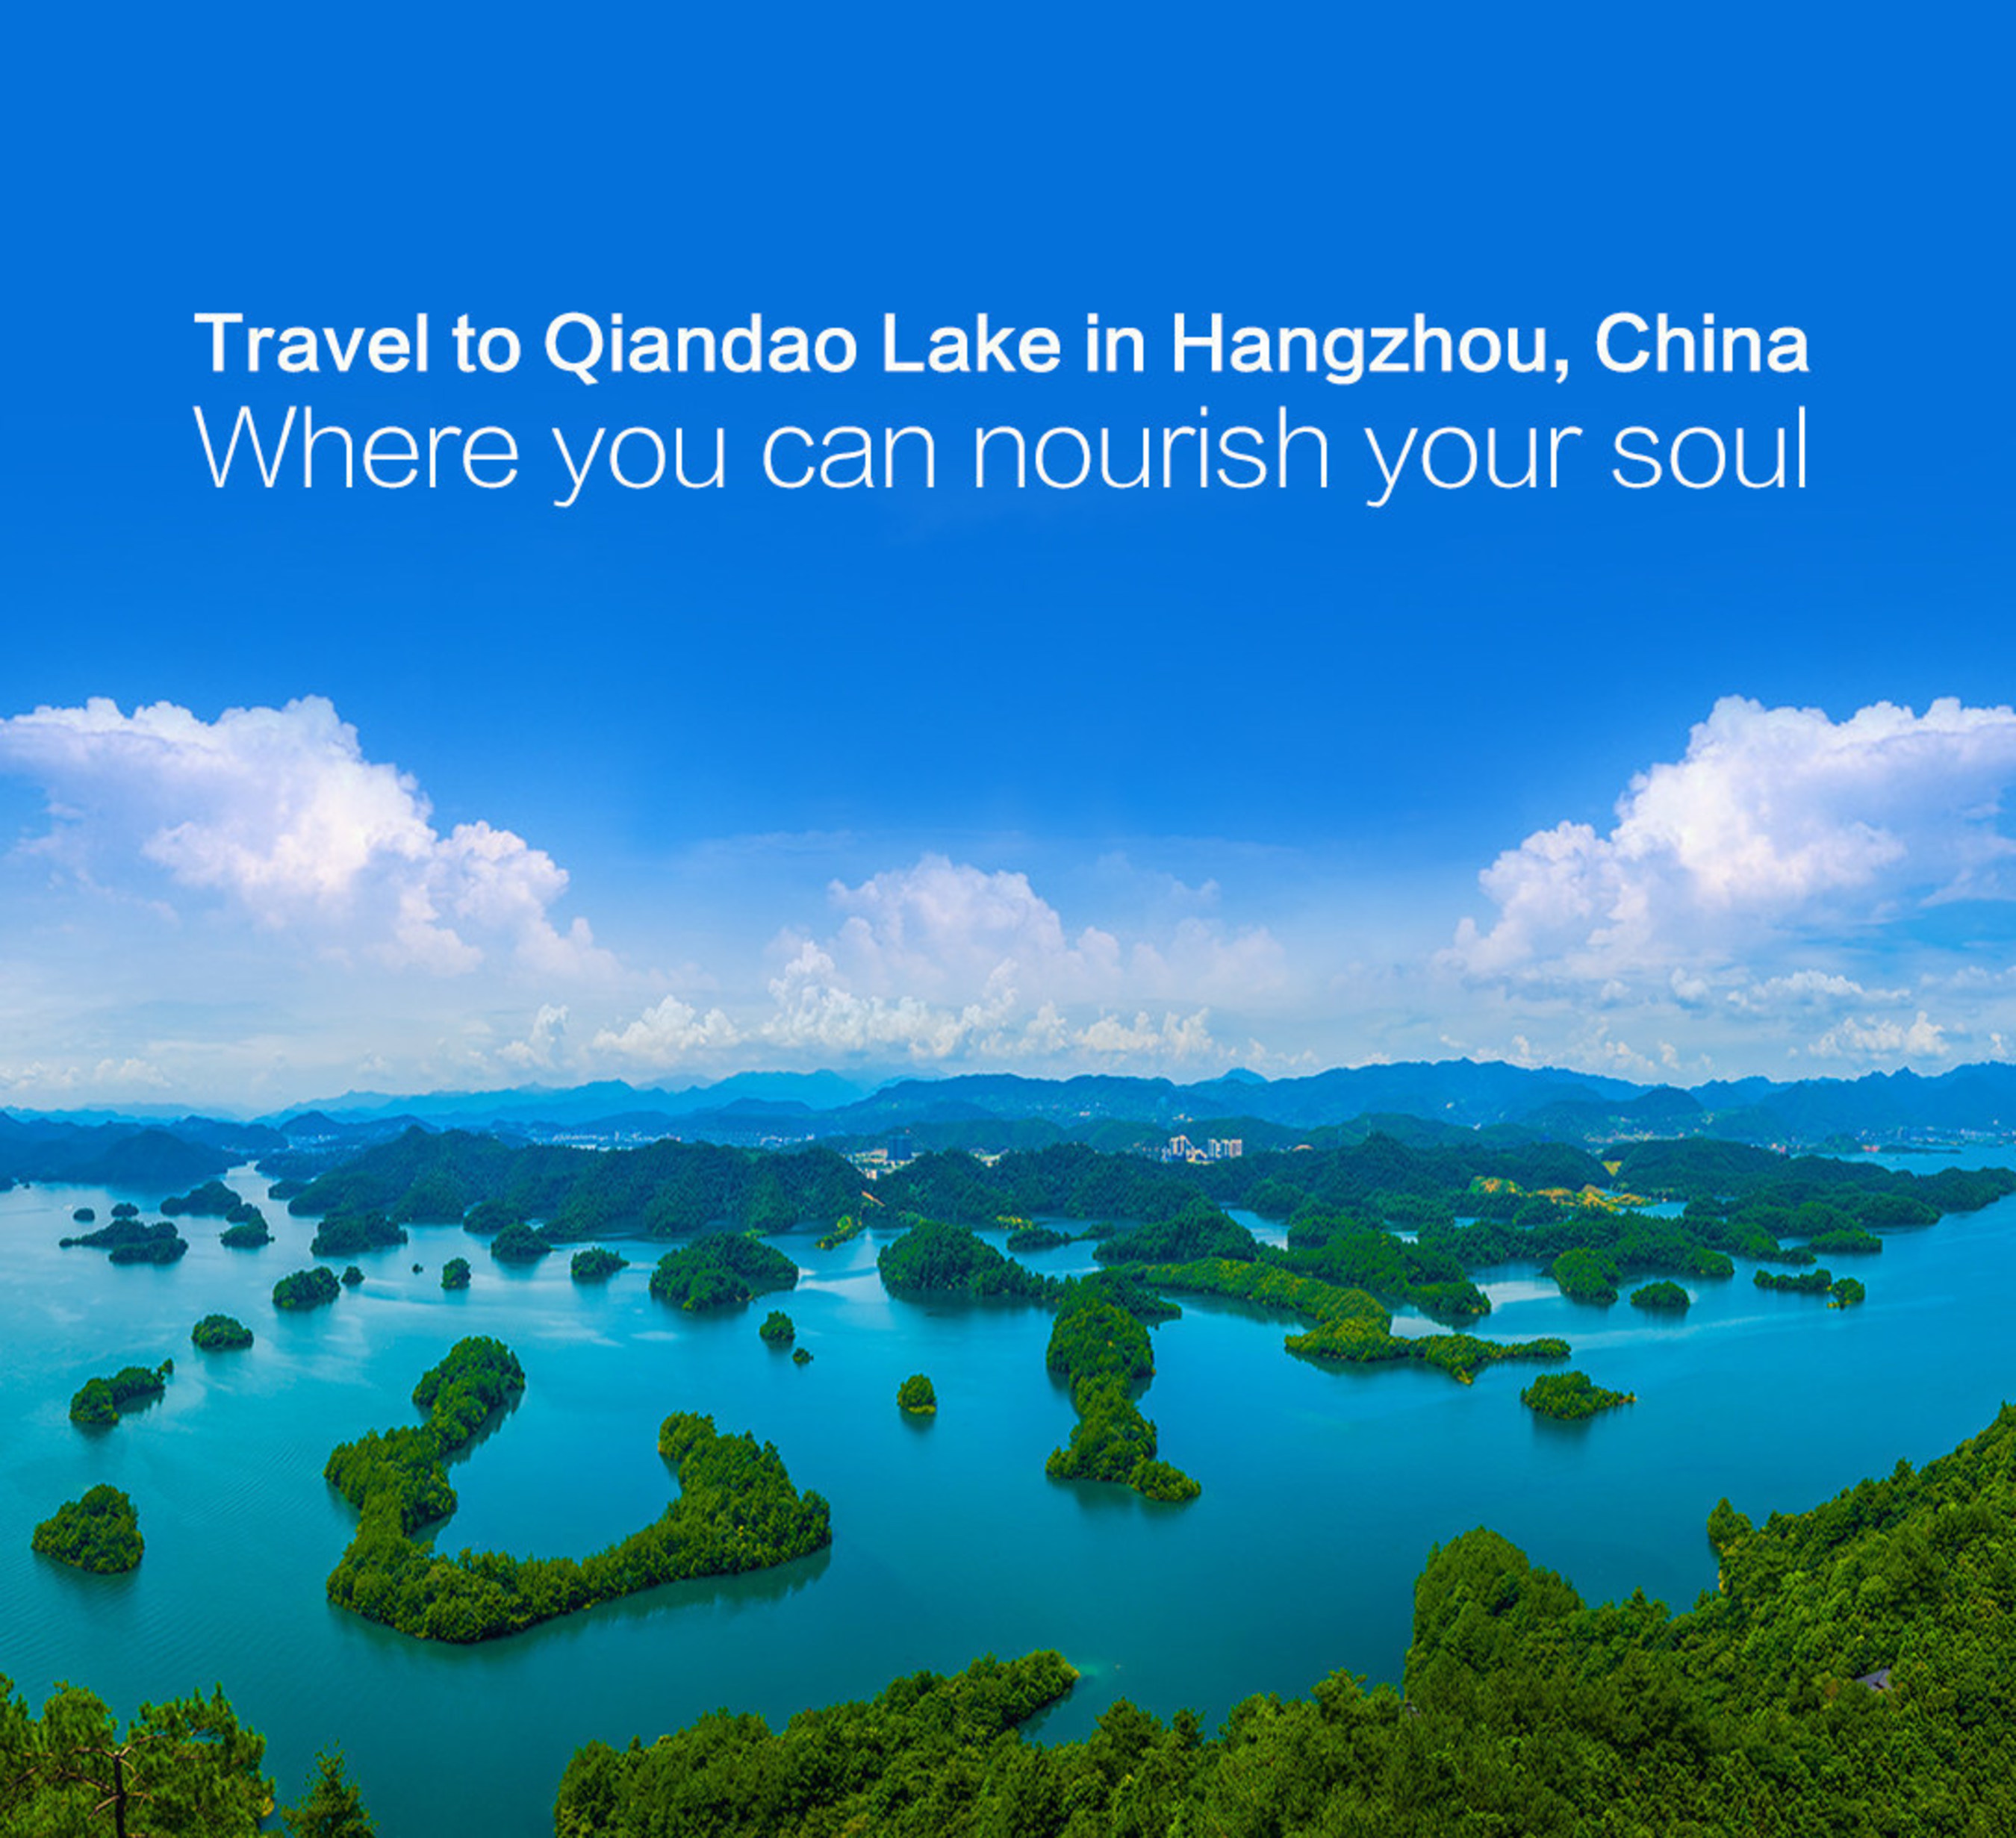 Pay a visit to Qiandao Lake, Hangzhou, China, an oasis for the soul